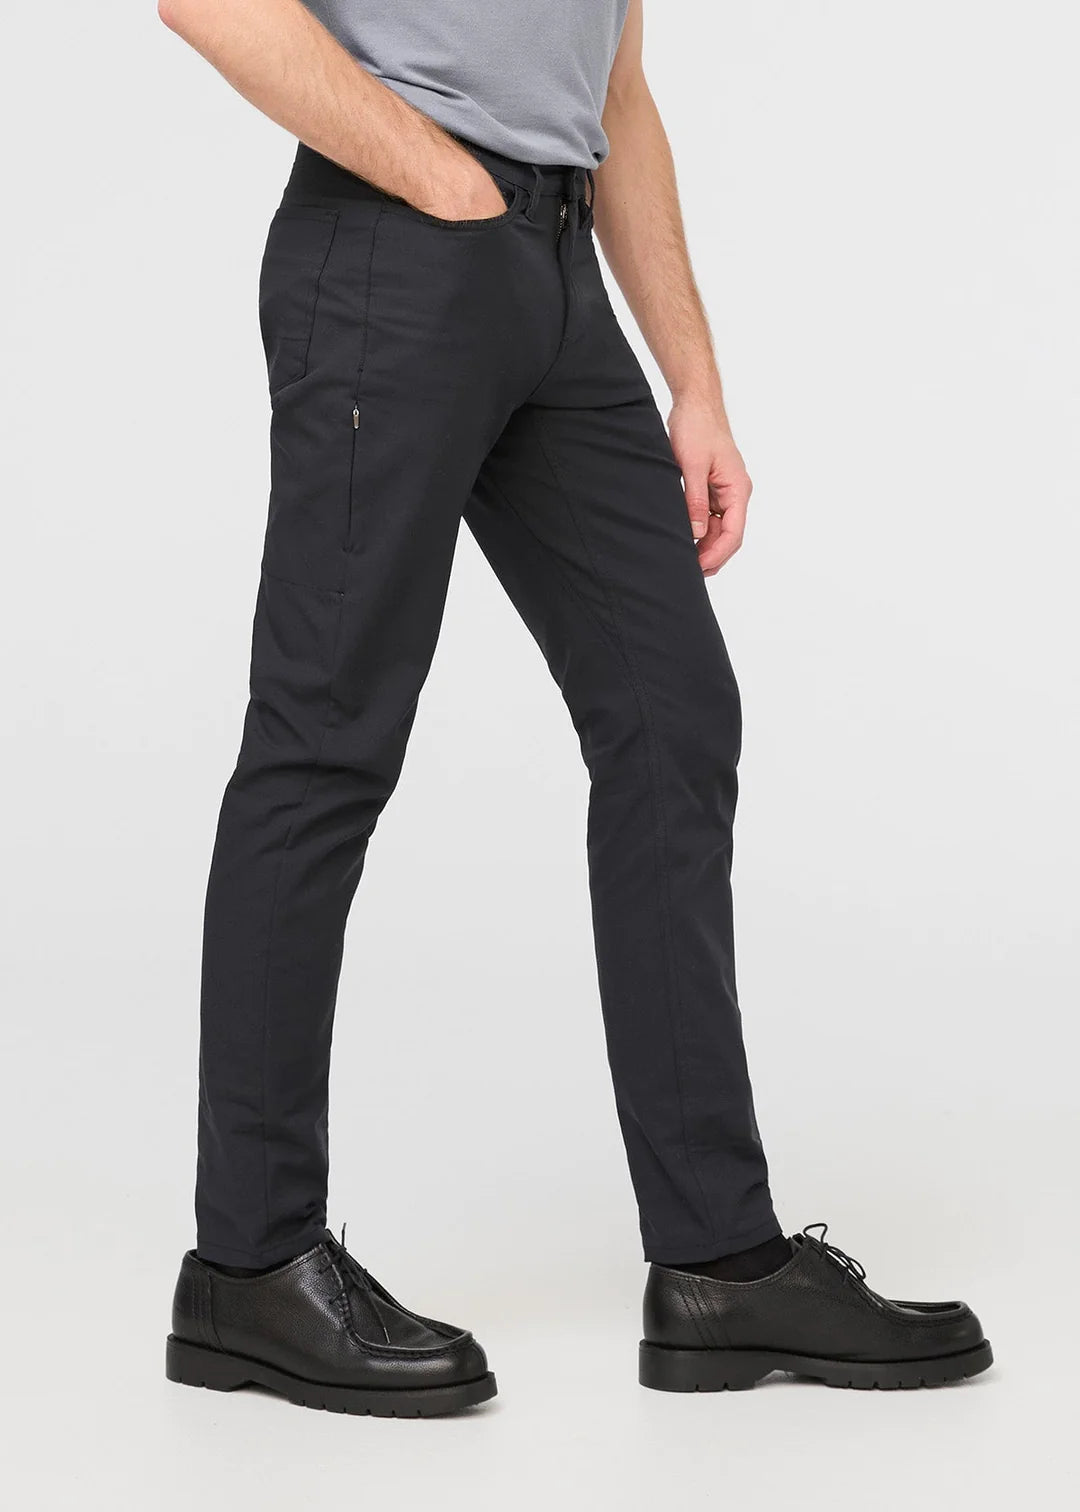 m bottoms - DUER - NuStretch Slim 5-Pocket Pants - PLENTY